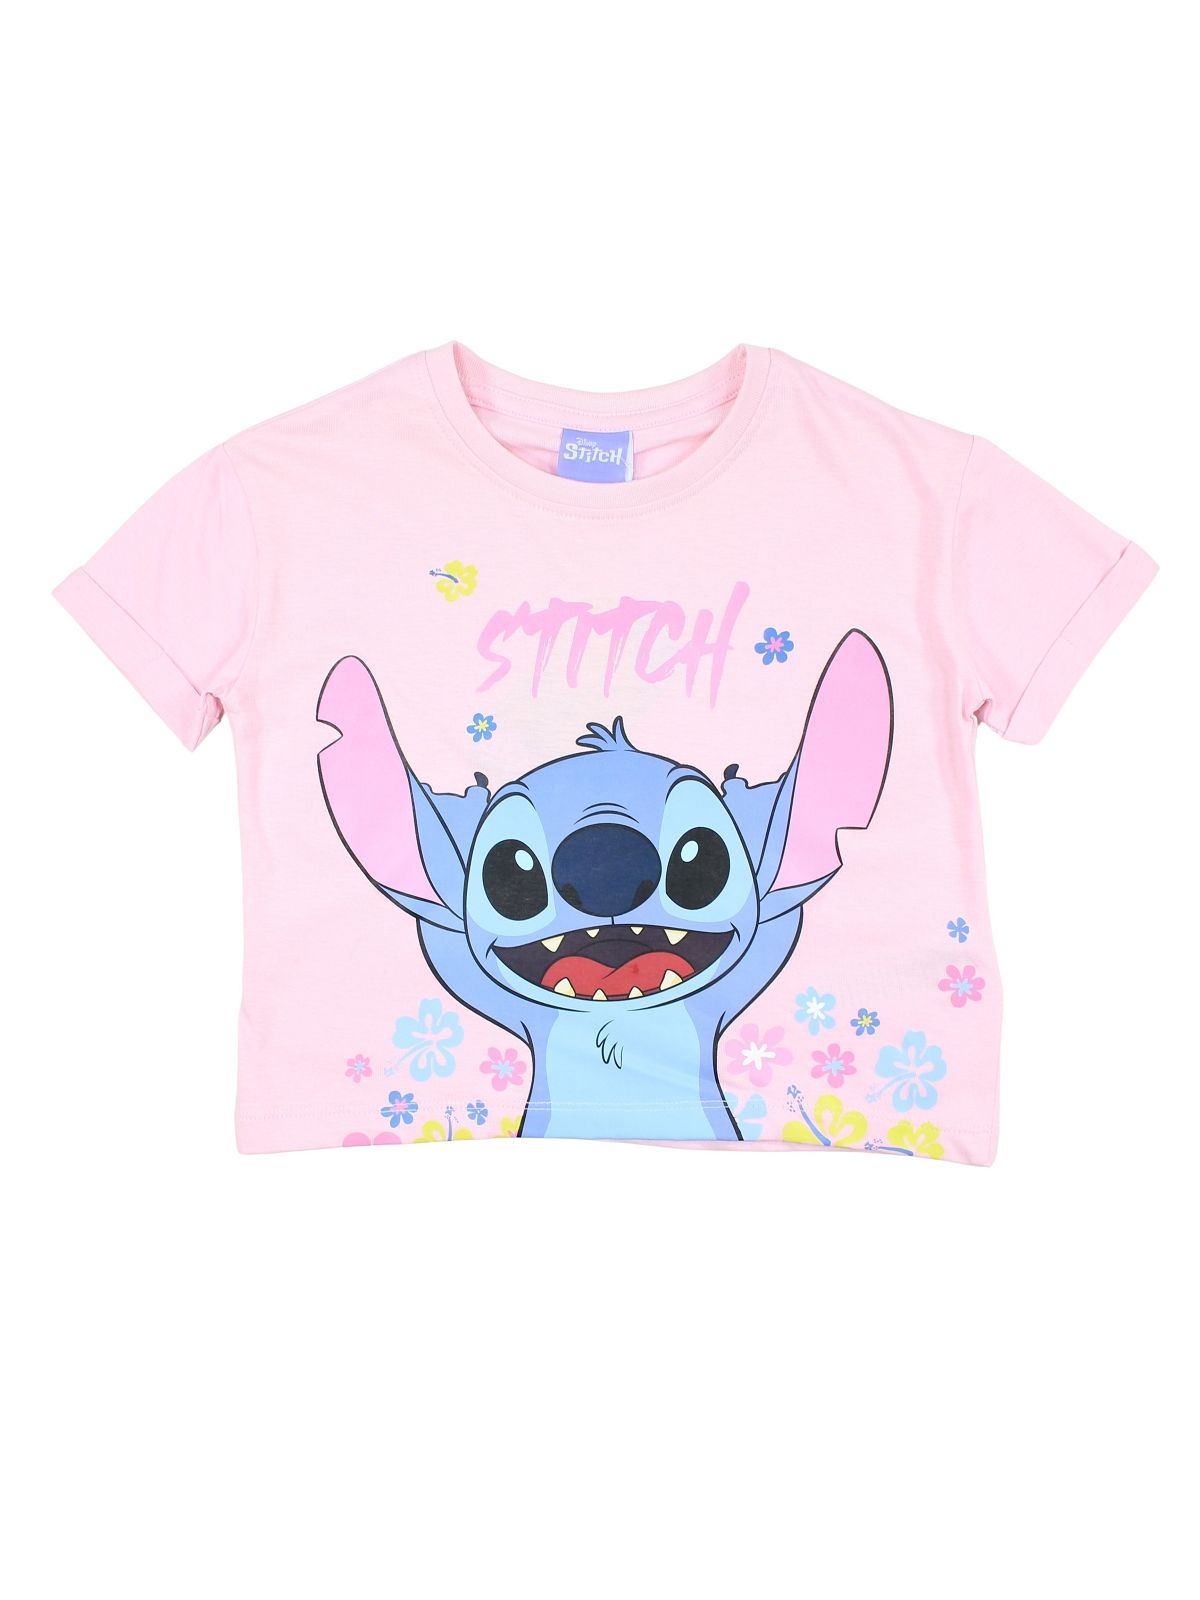 Lilo und Stitch-T-Shirt.